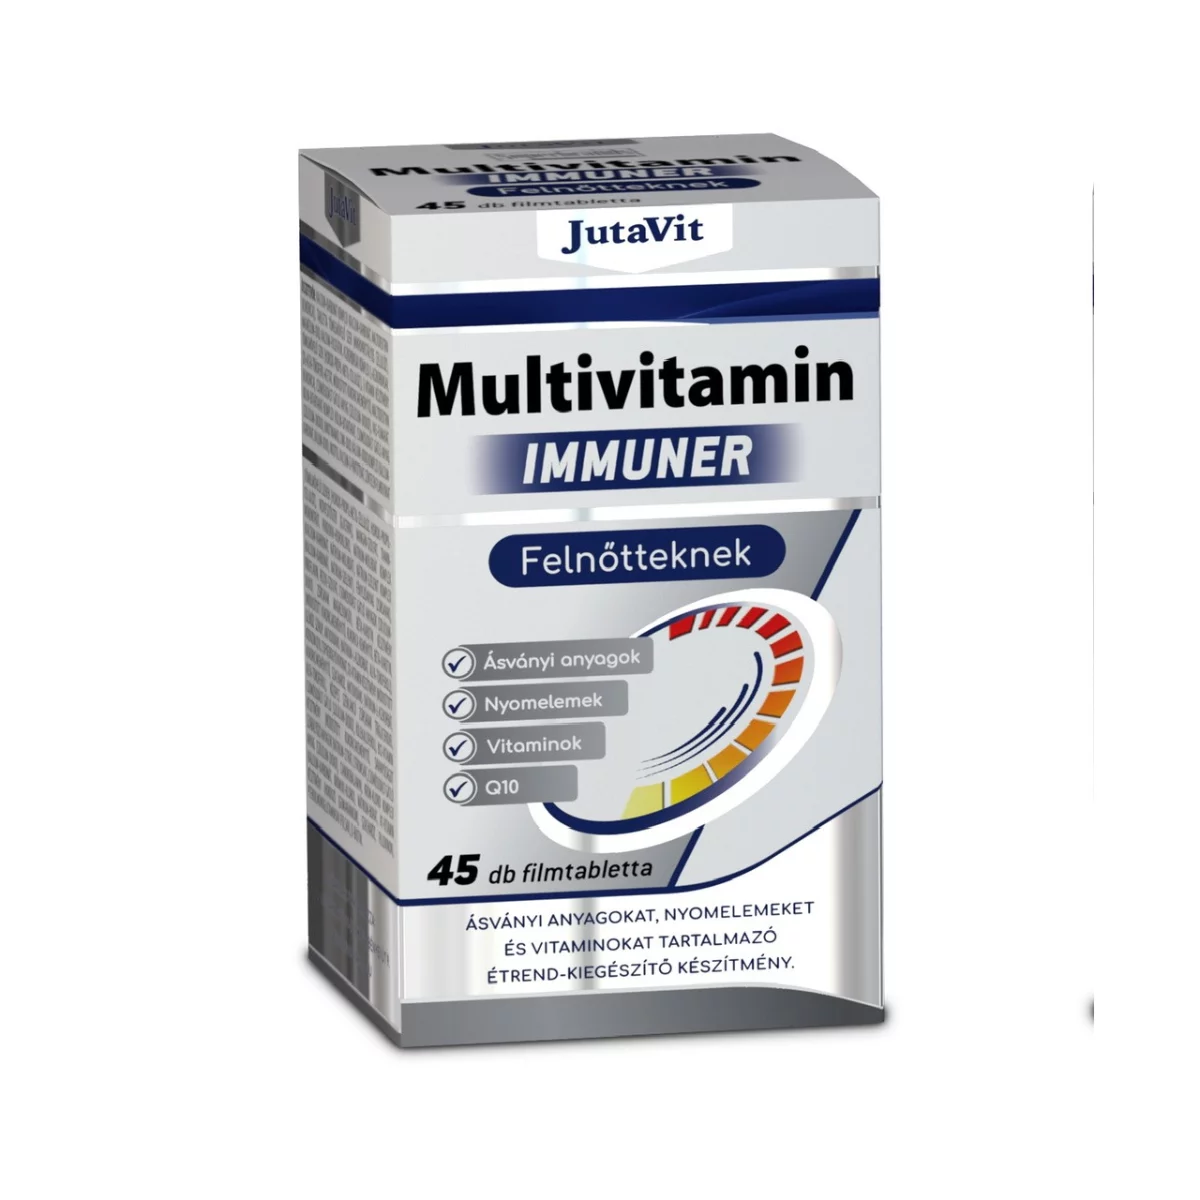 Jutavit filmtabletta 45db Multivitamin Immuner felnőtteknek